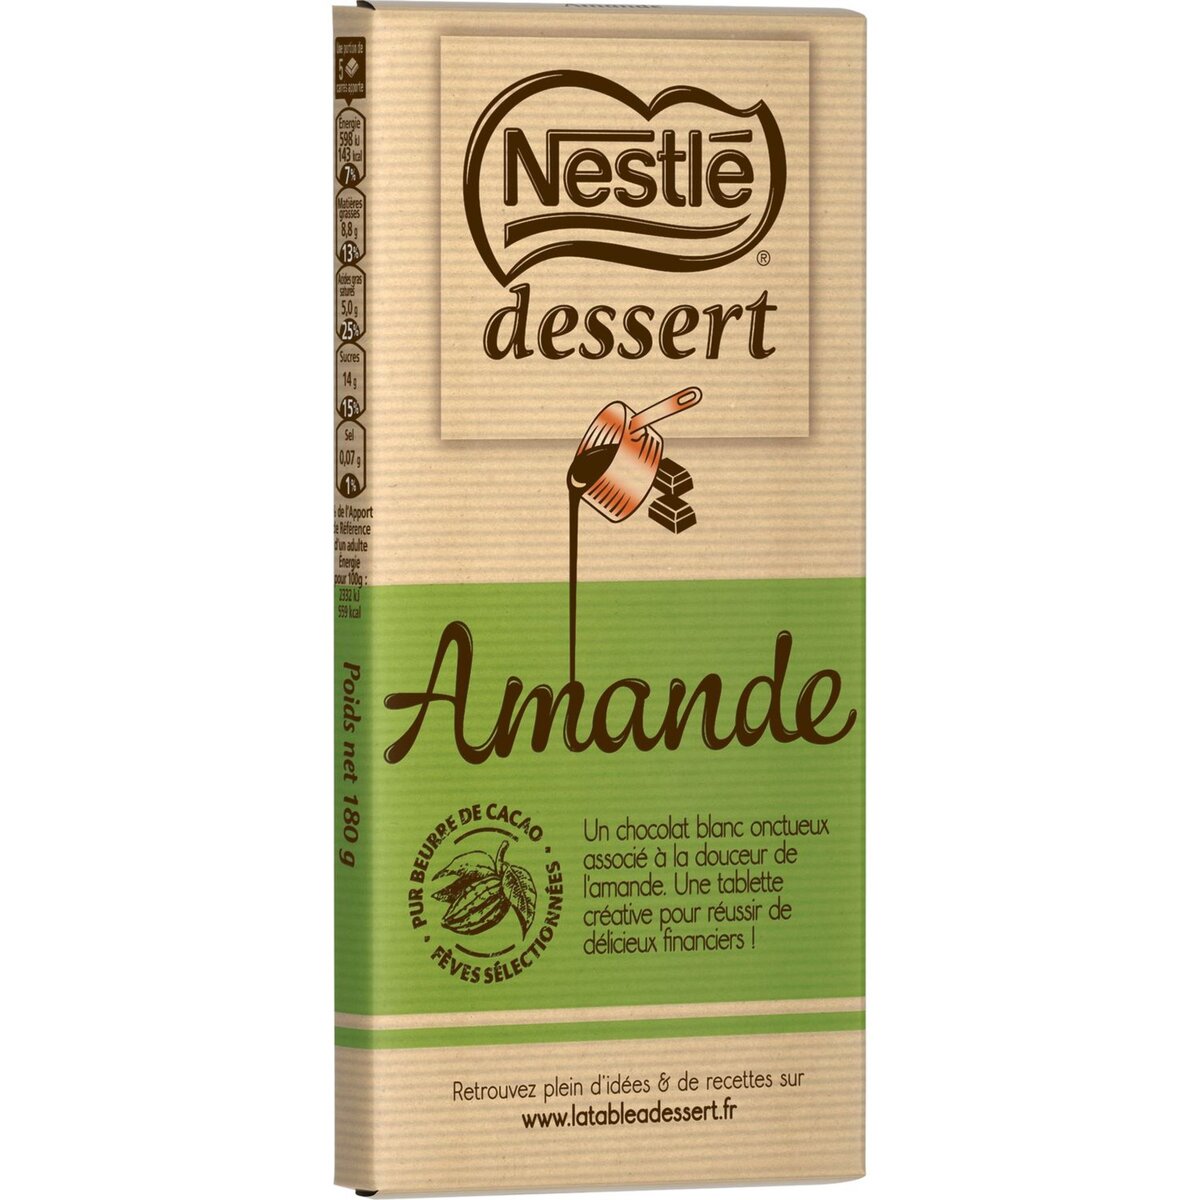 NESTLE Nestlé dessert amande 180g